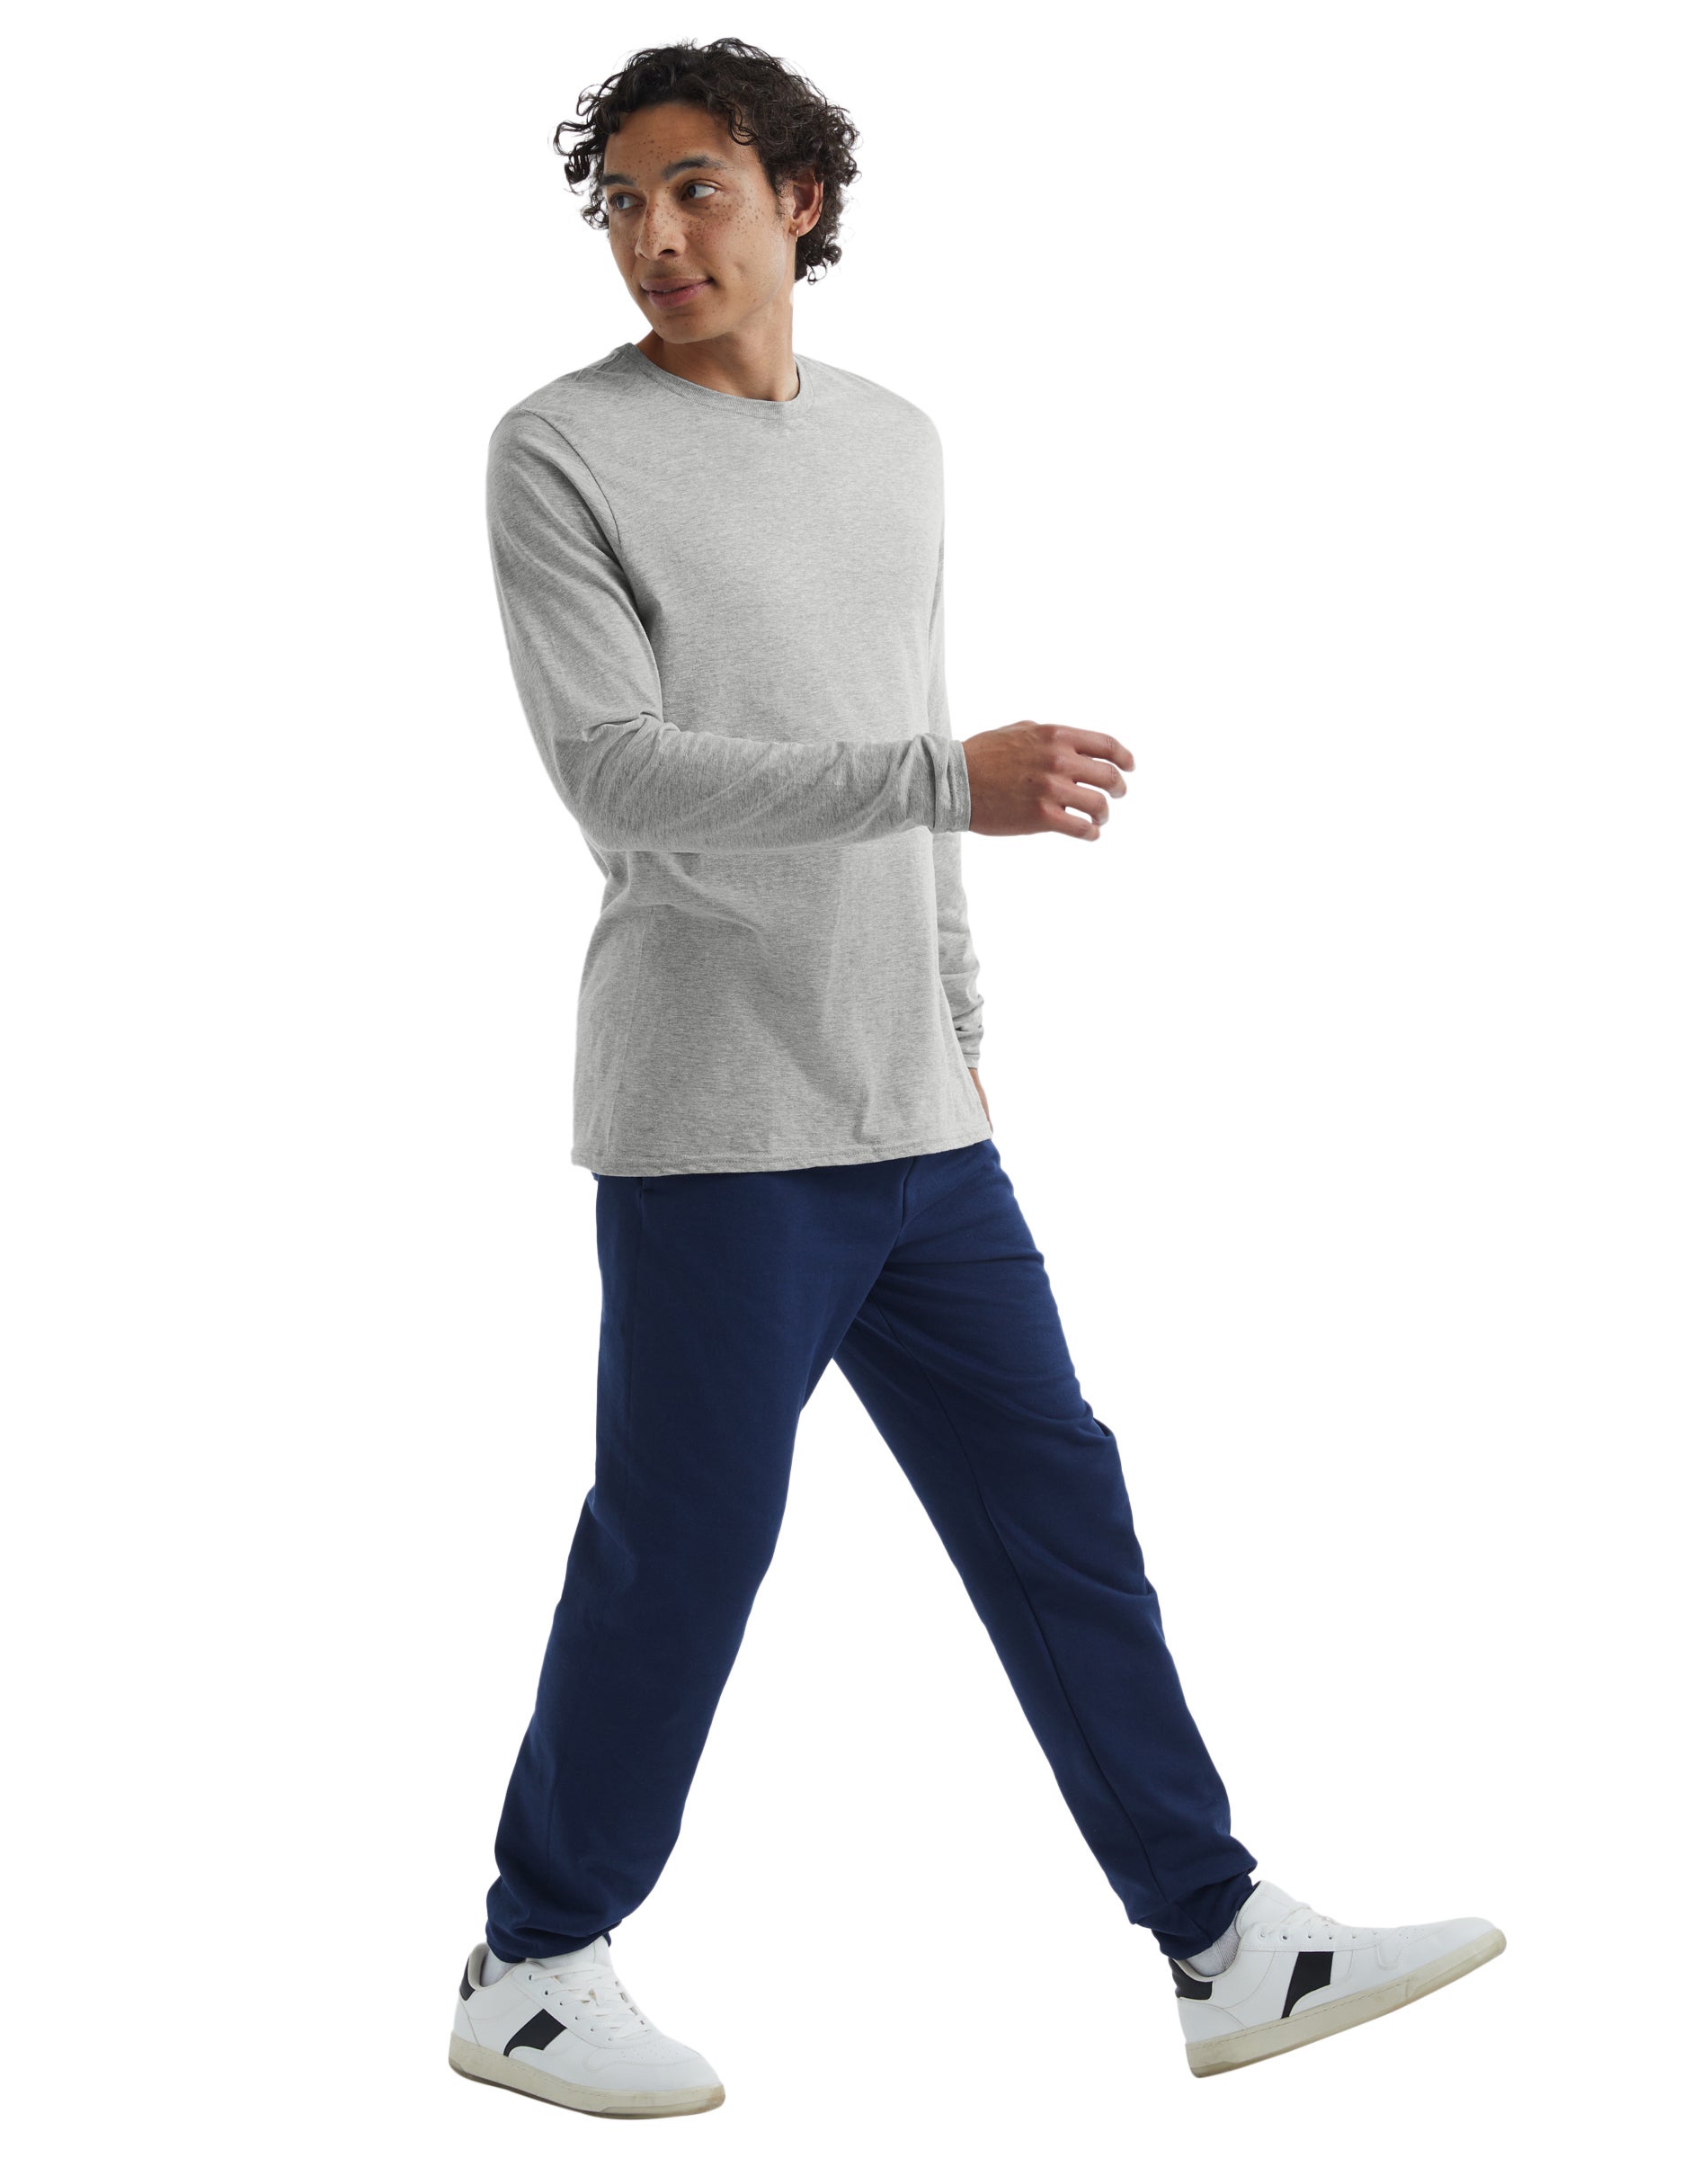 Hanes Men's Perfect-T Long Sleeve T-Shirt Ash S - image 4 of 8